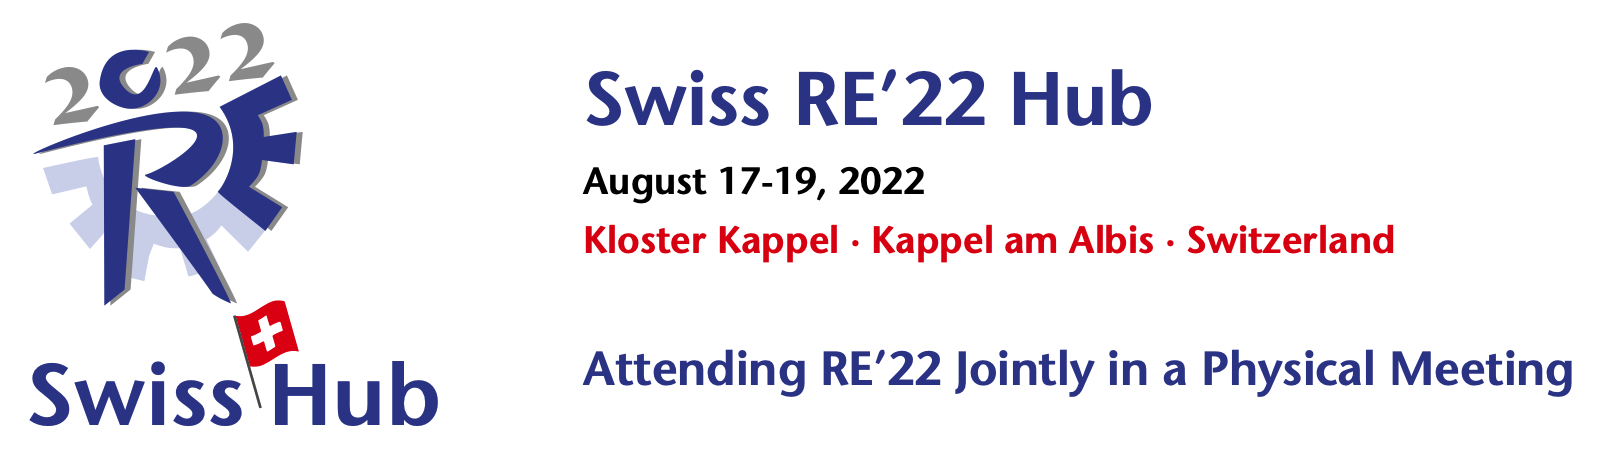 Swiss RE’22 Hub